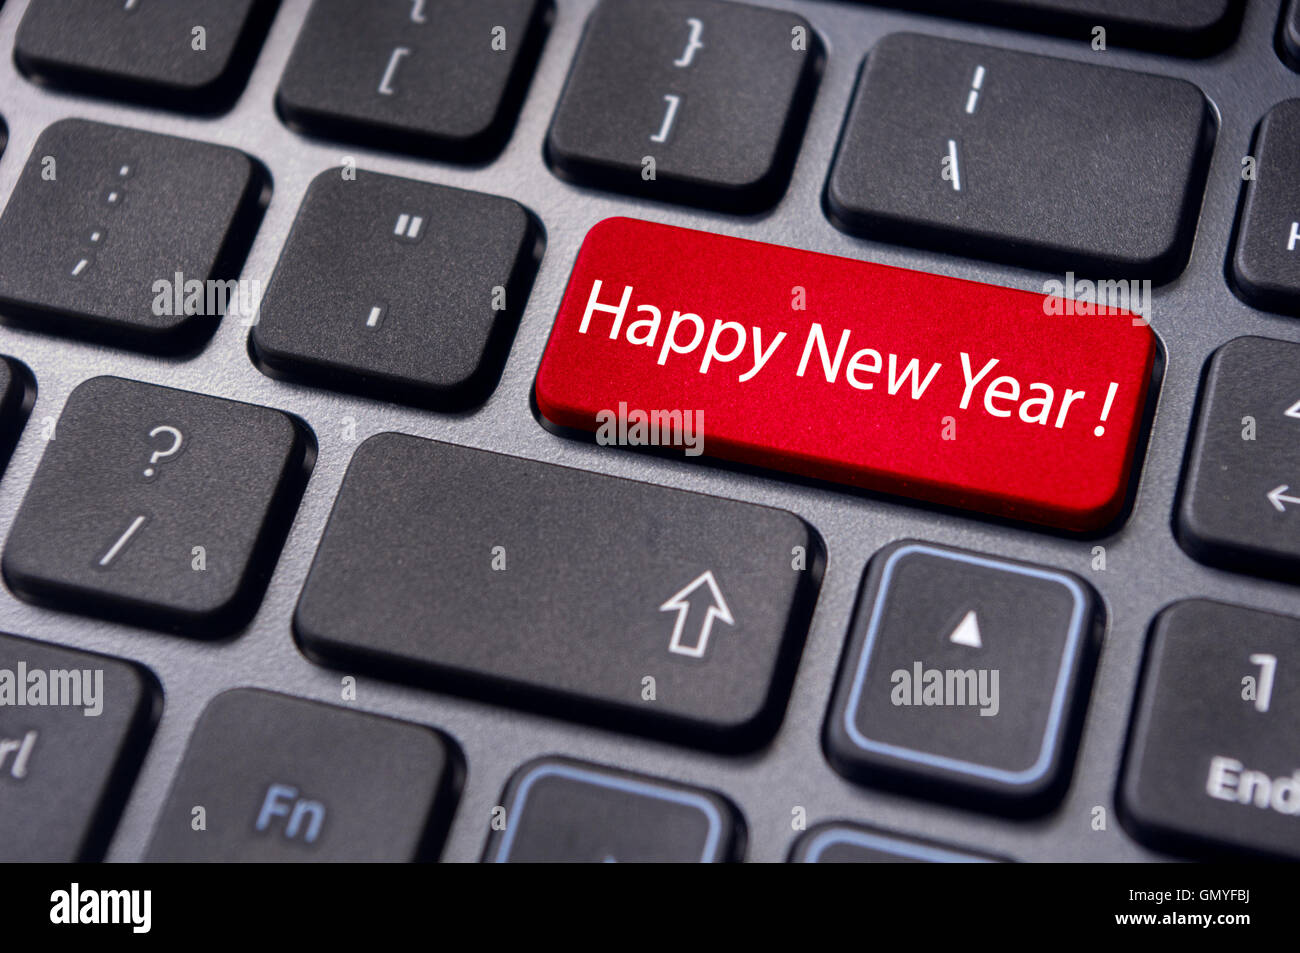 happy new year message, keyboard enter key Stock Photo